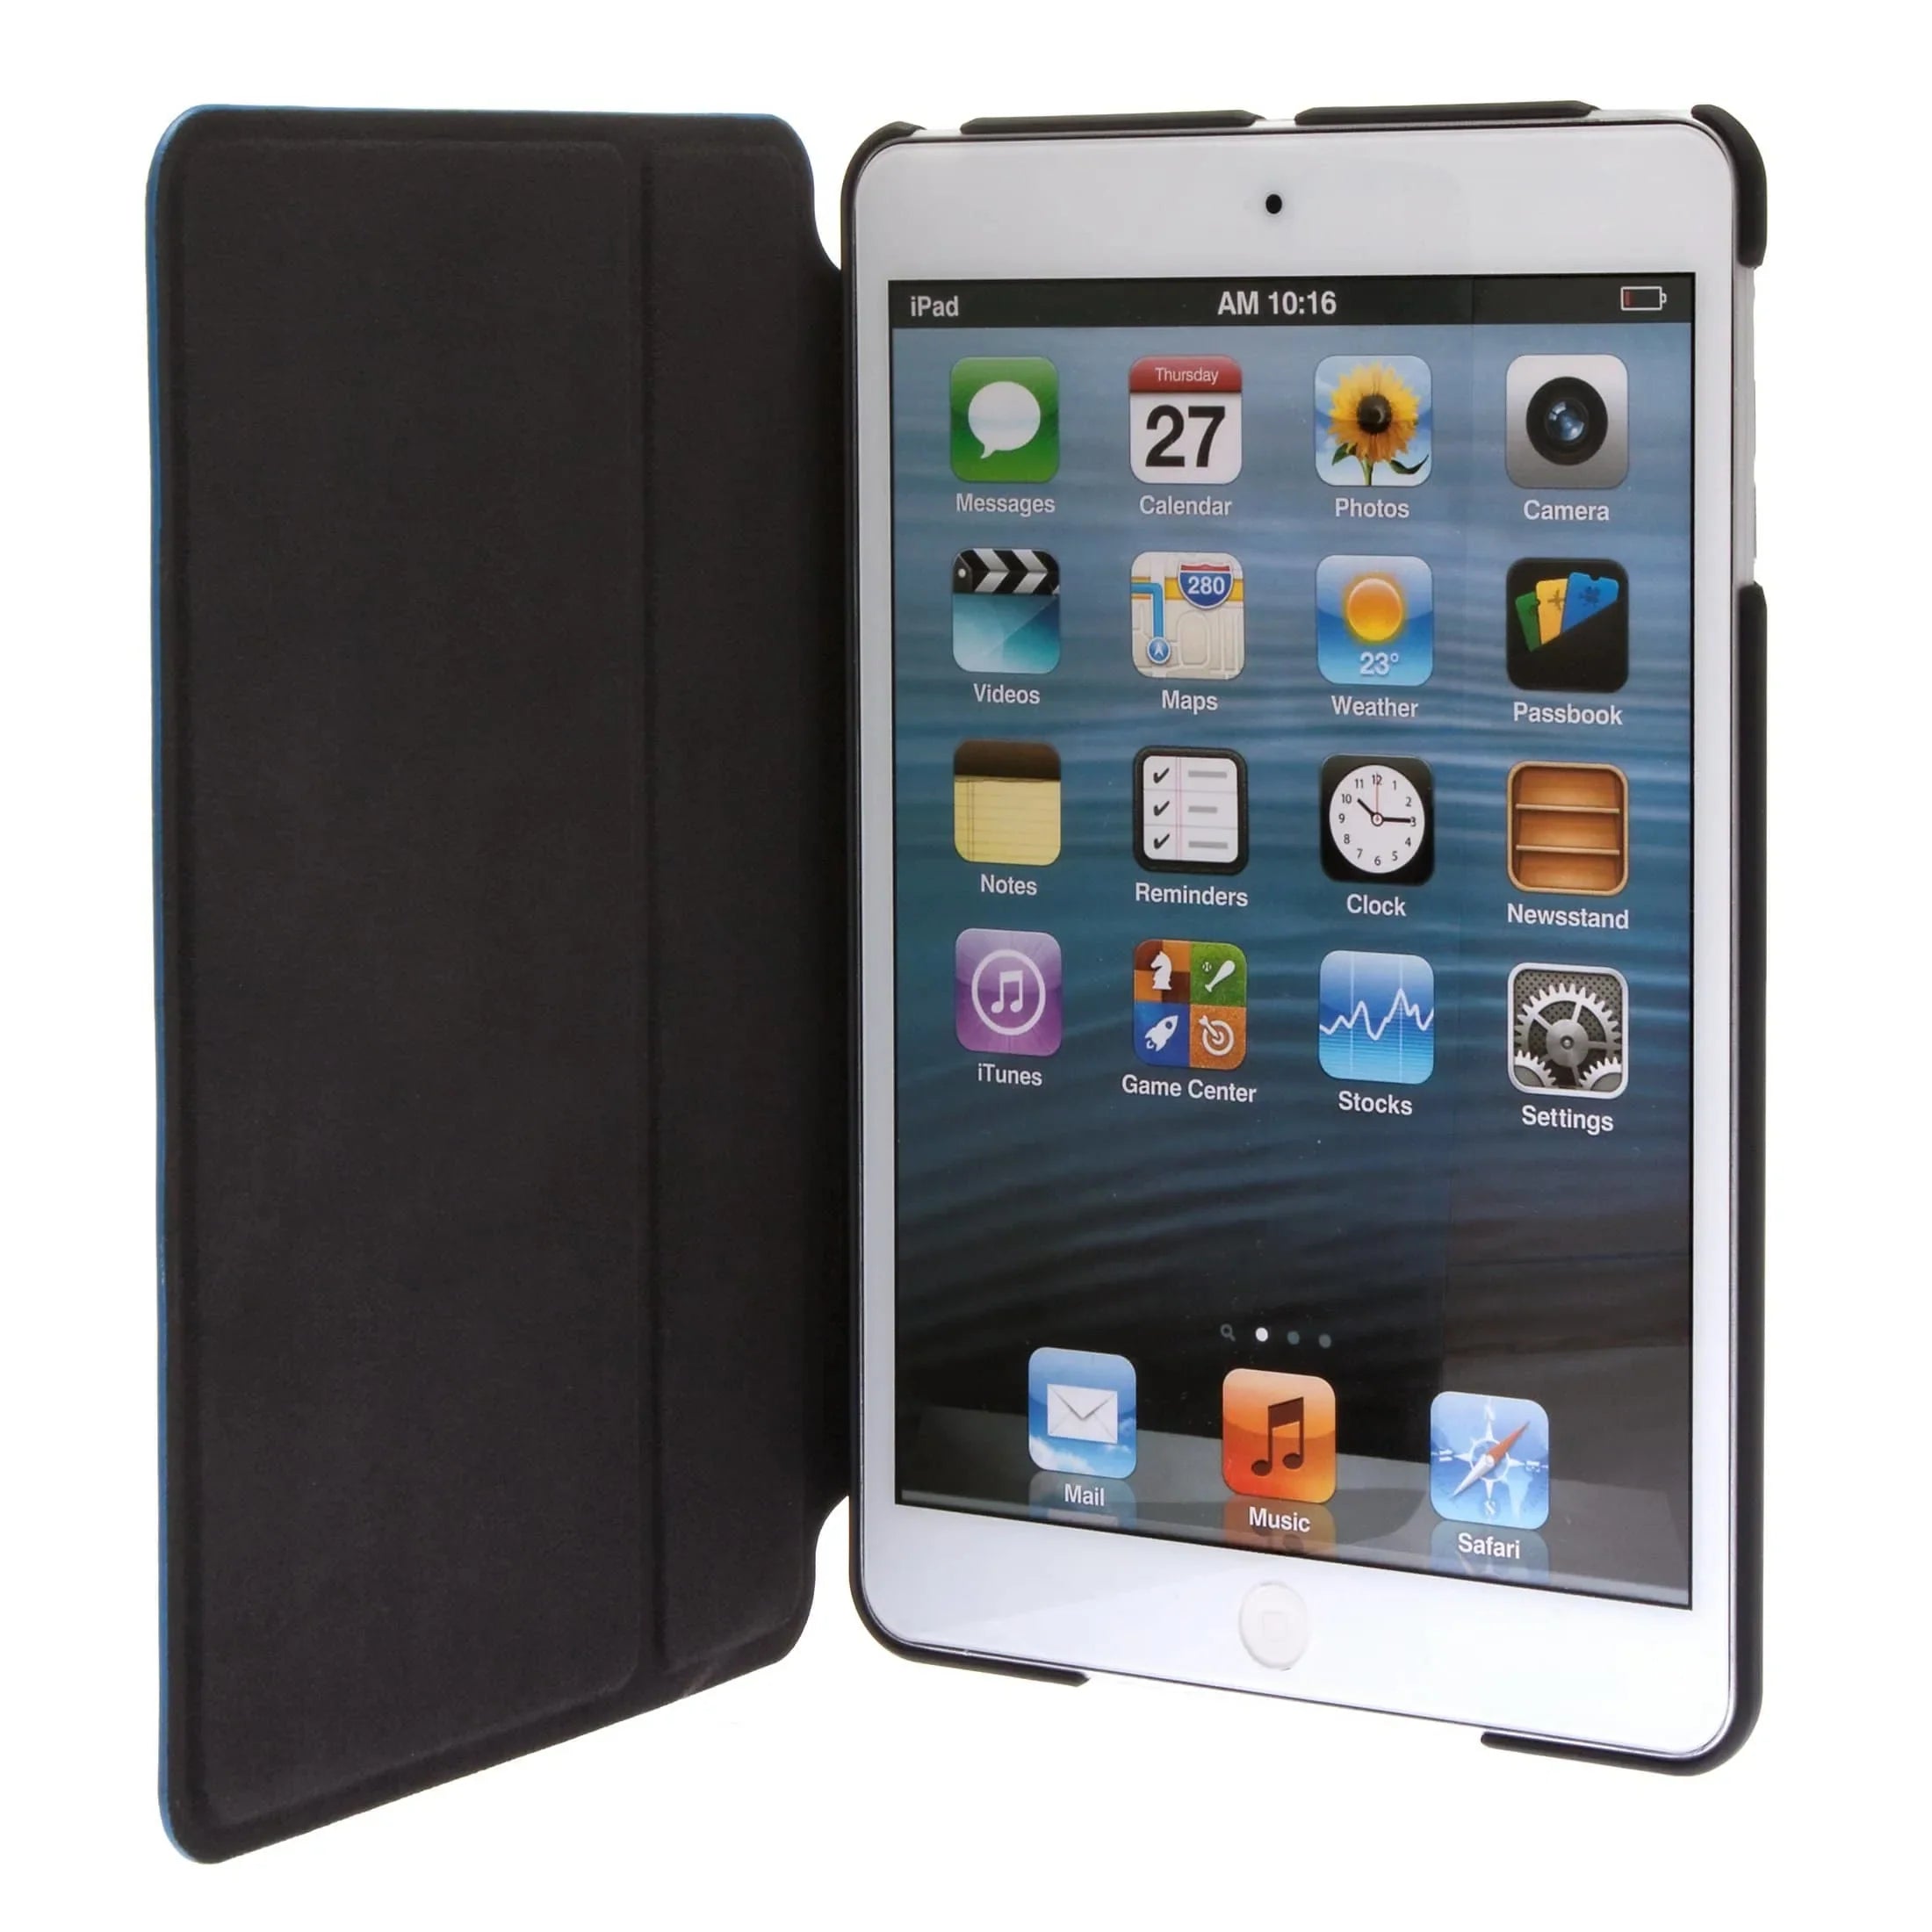 Tumi Accessories Lederschutzhülle für iPad Air 24 cm - fuchsia